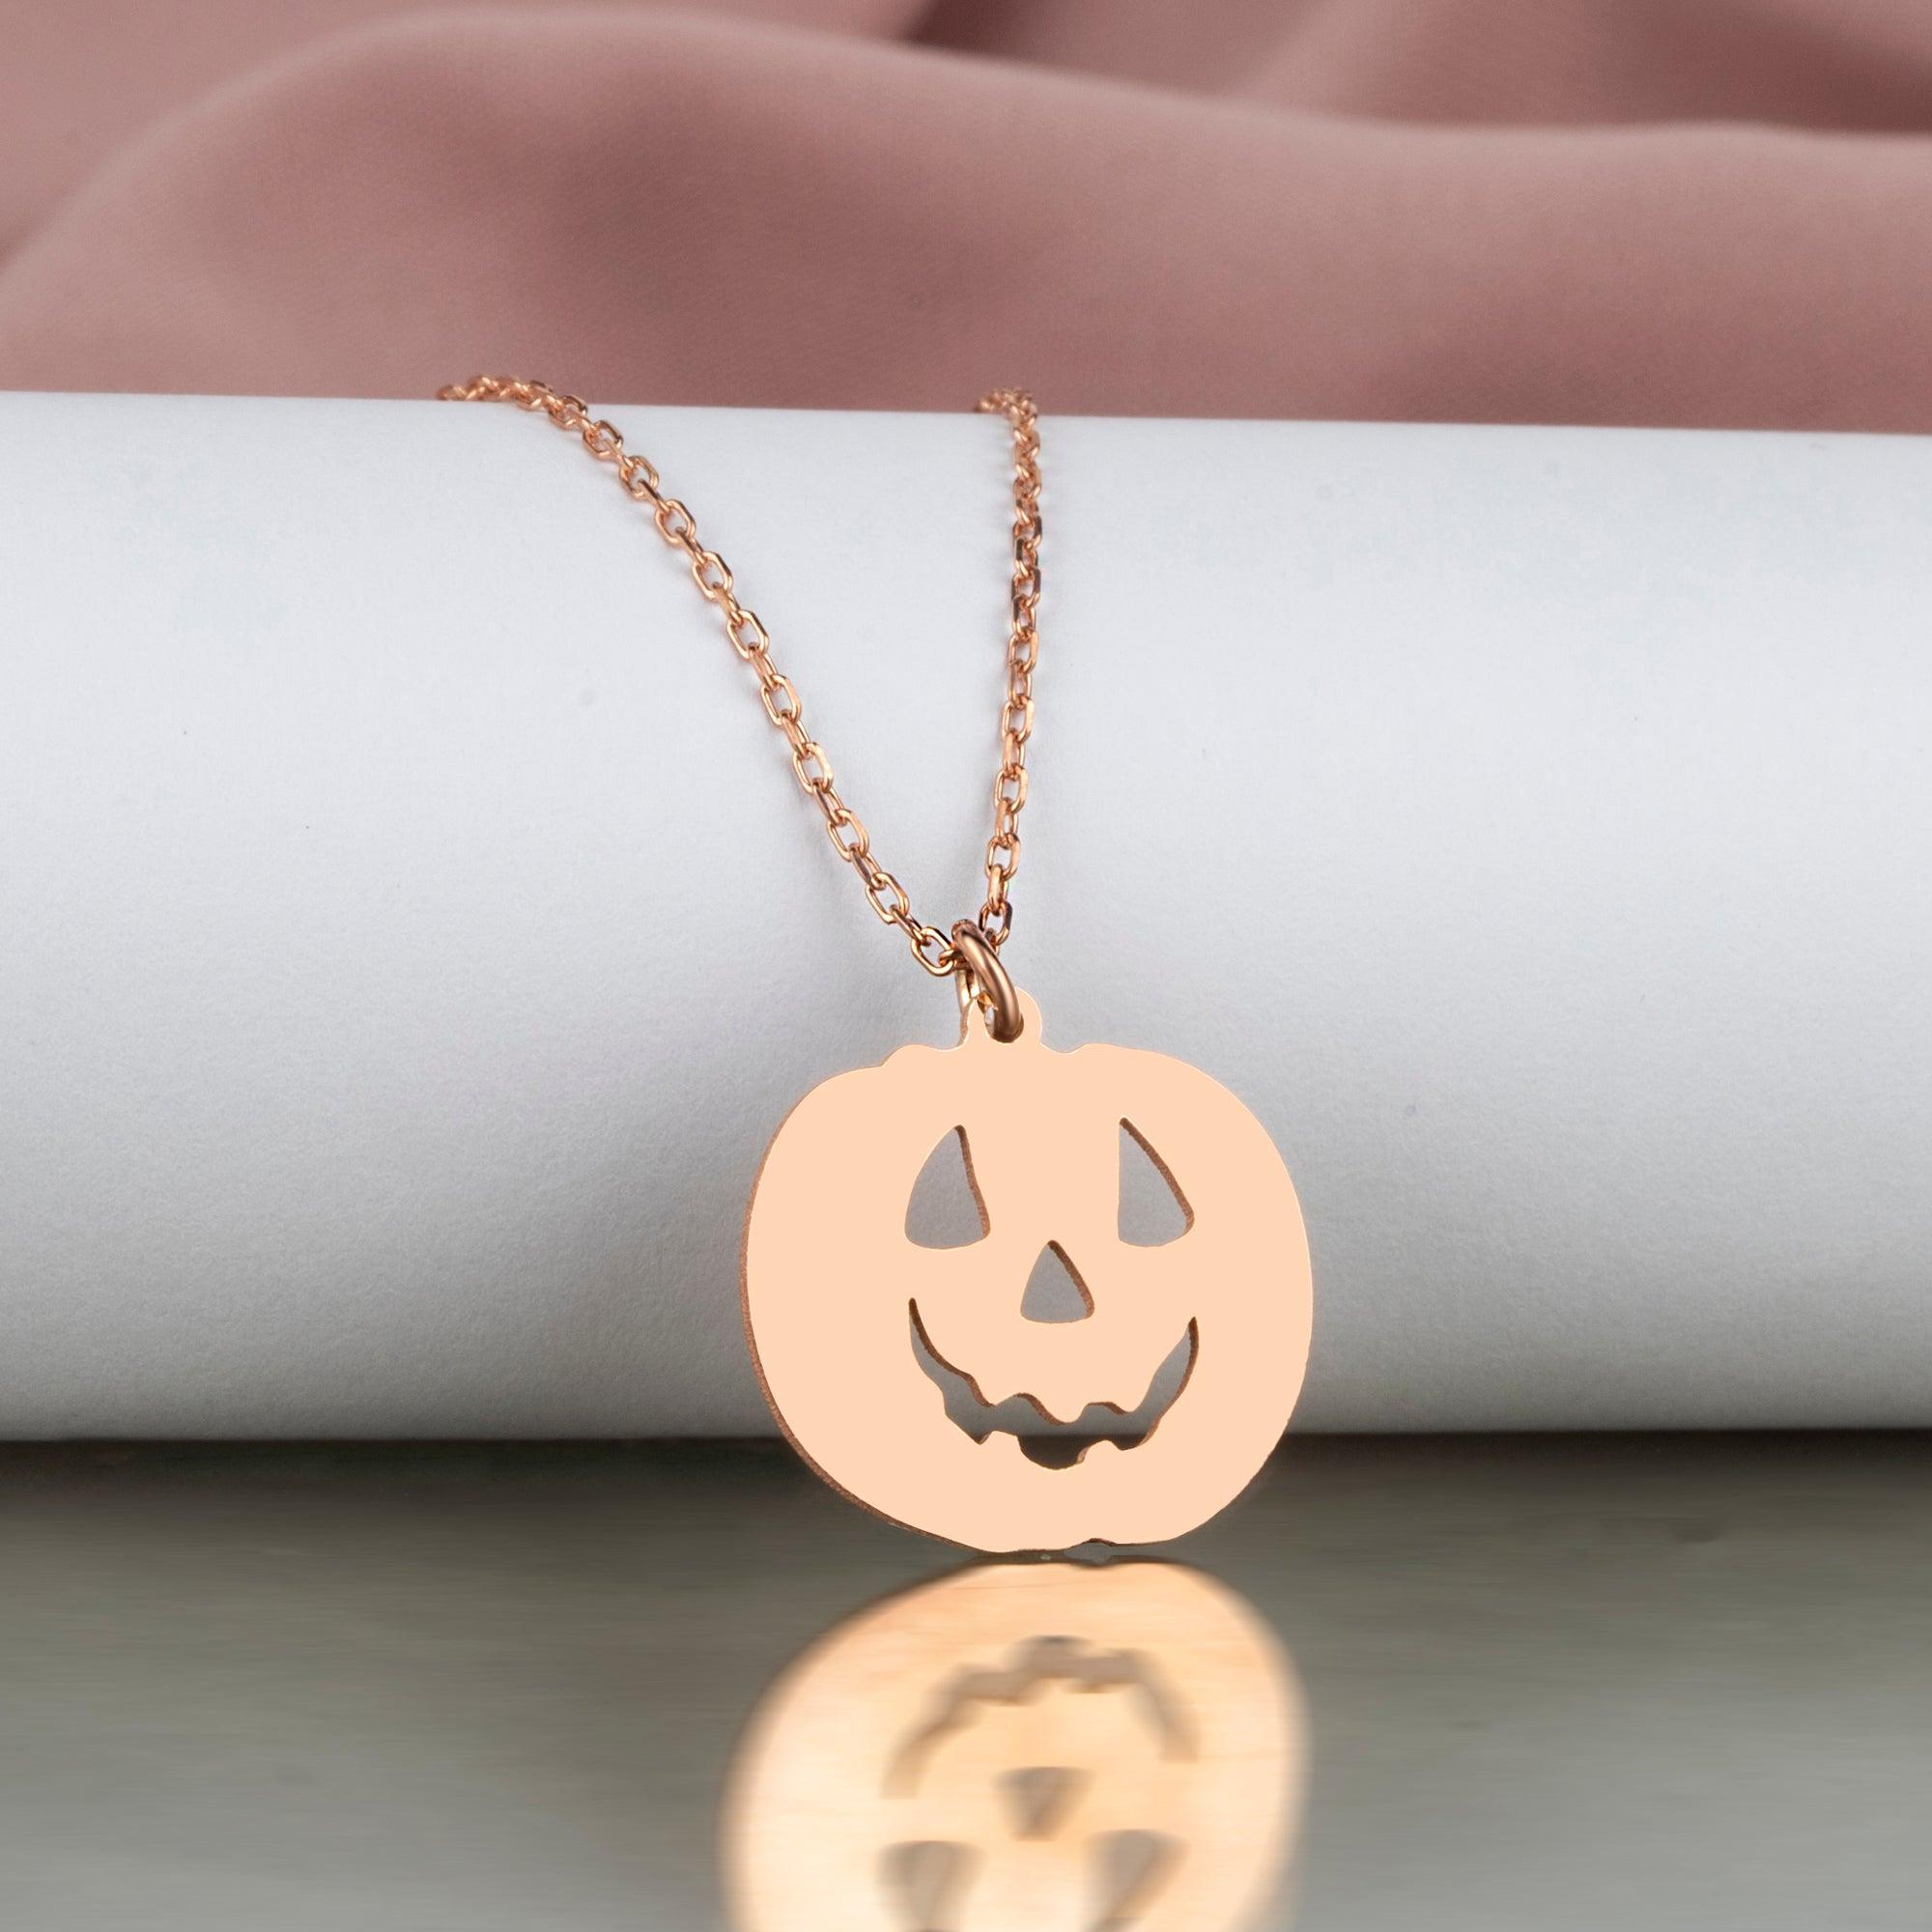 Jack o Lantern Carved Halloween Pumpkin Pendant Necklace or Key Chain Charm  | eBay